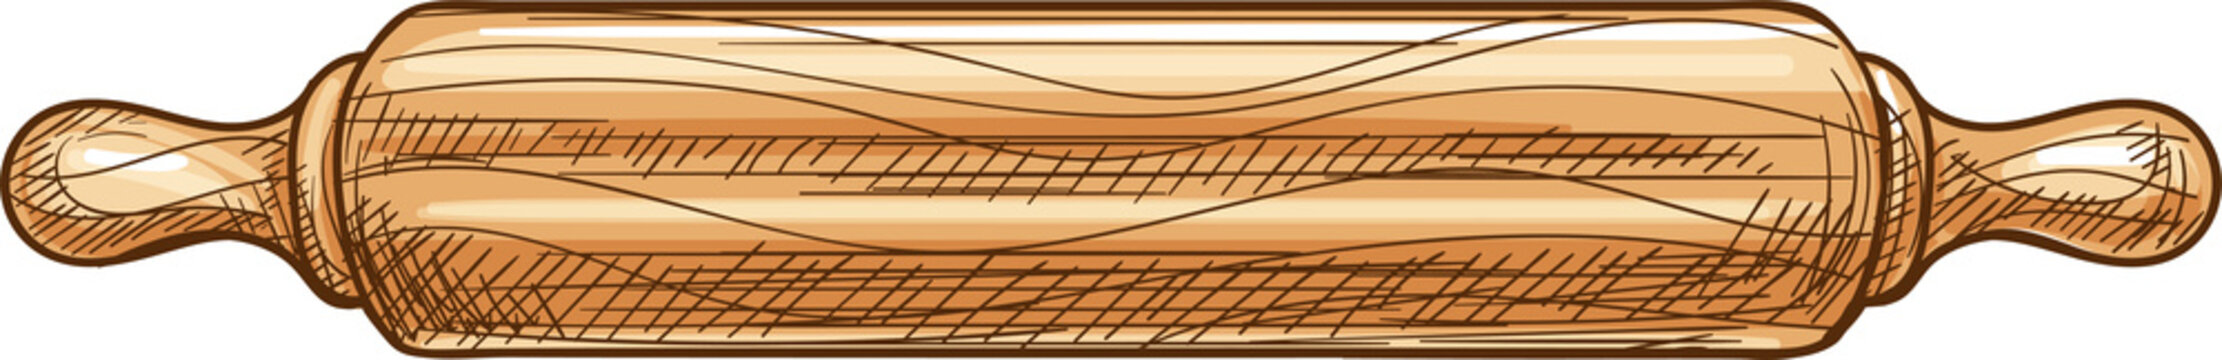 Rolling pin isolated wooden bakery dough roller. Vector bakery tool, dough flatten roller